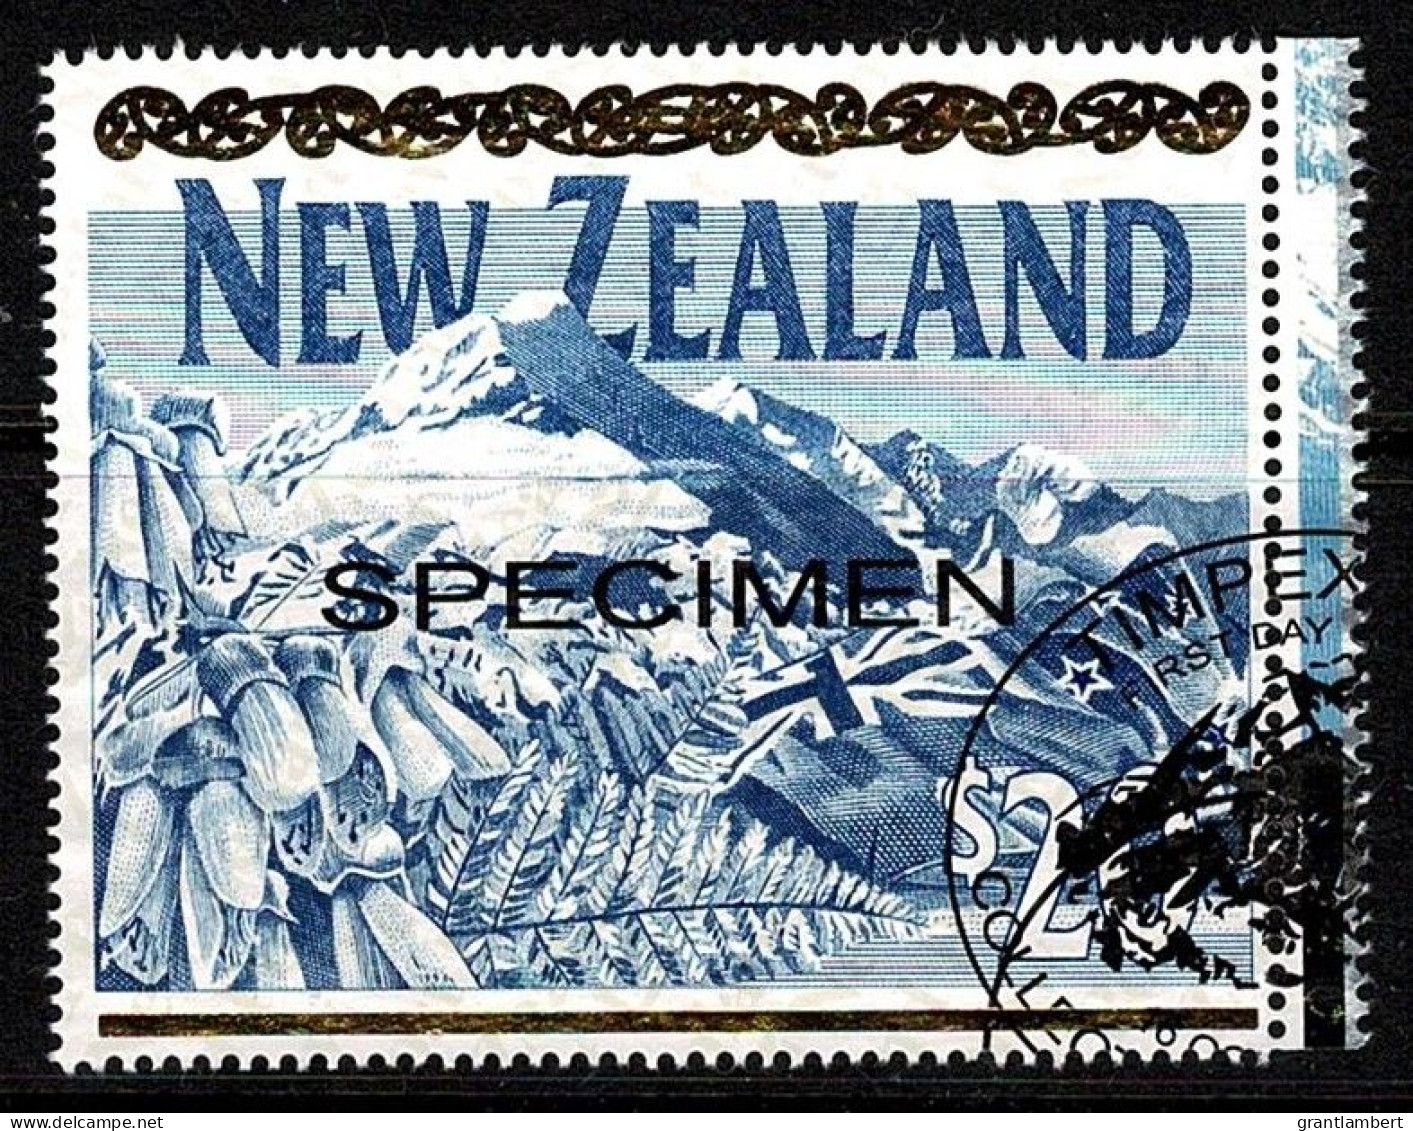 New Zealand 2009 Mt. Cook  $20 SPECIMEN Used - Gebraucht